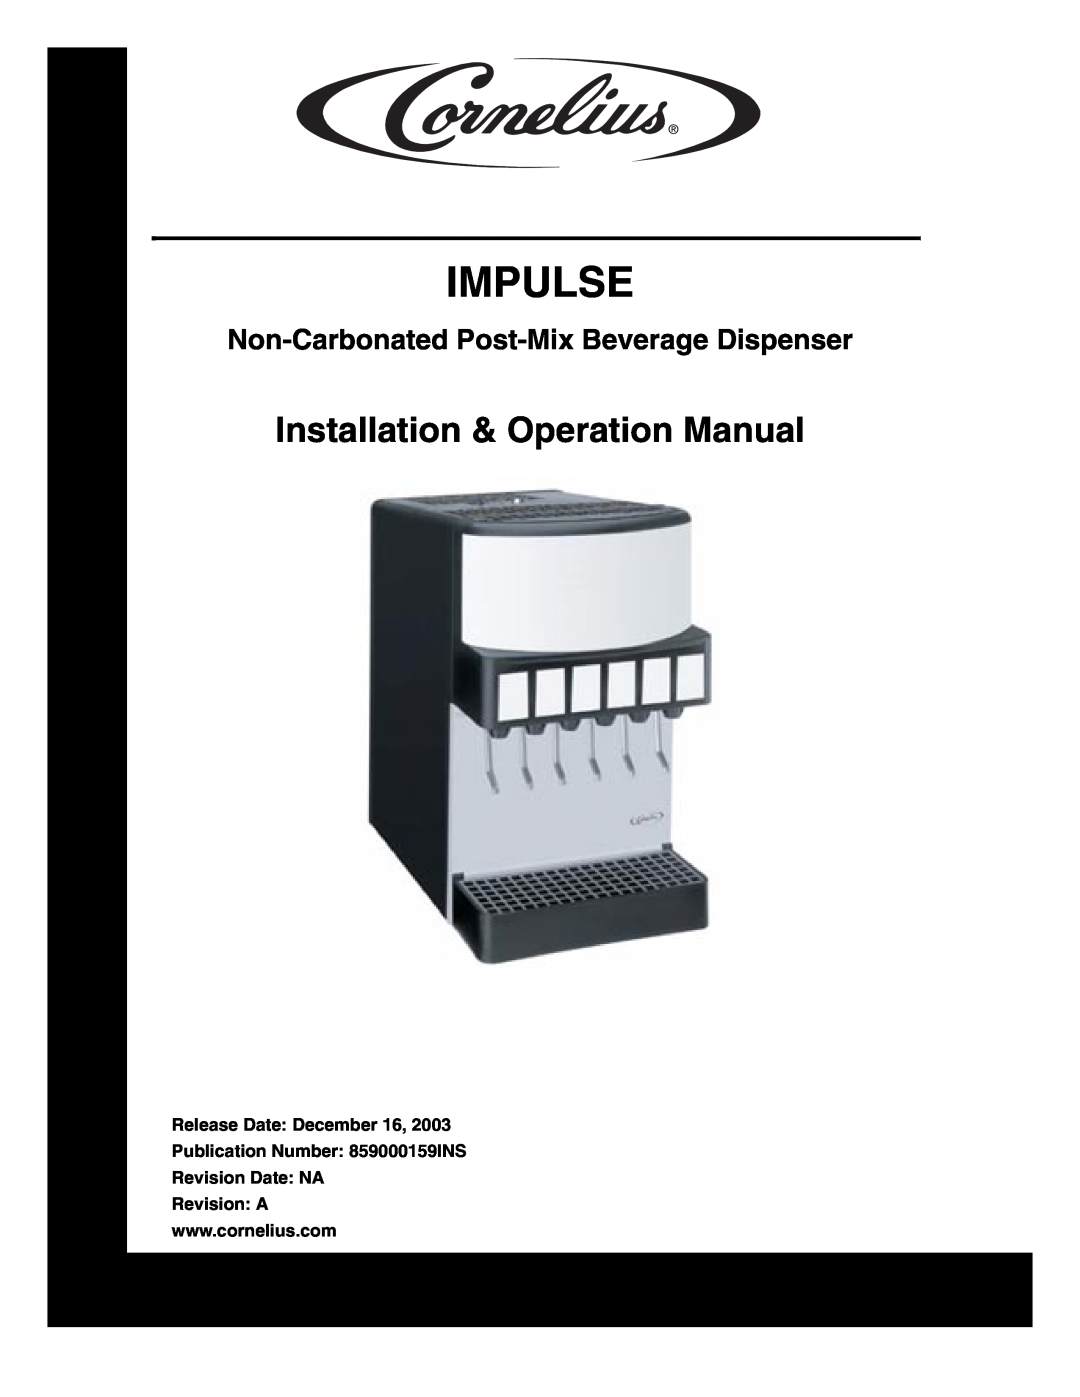 Cornelius Non-Carbonated Post-Mix Beverage Dispenser operation manual Installation & Operation Manual, Impulse 